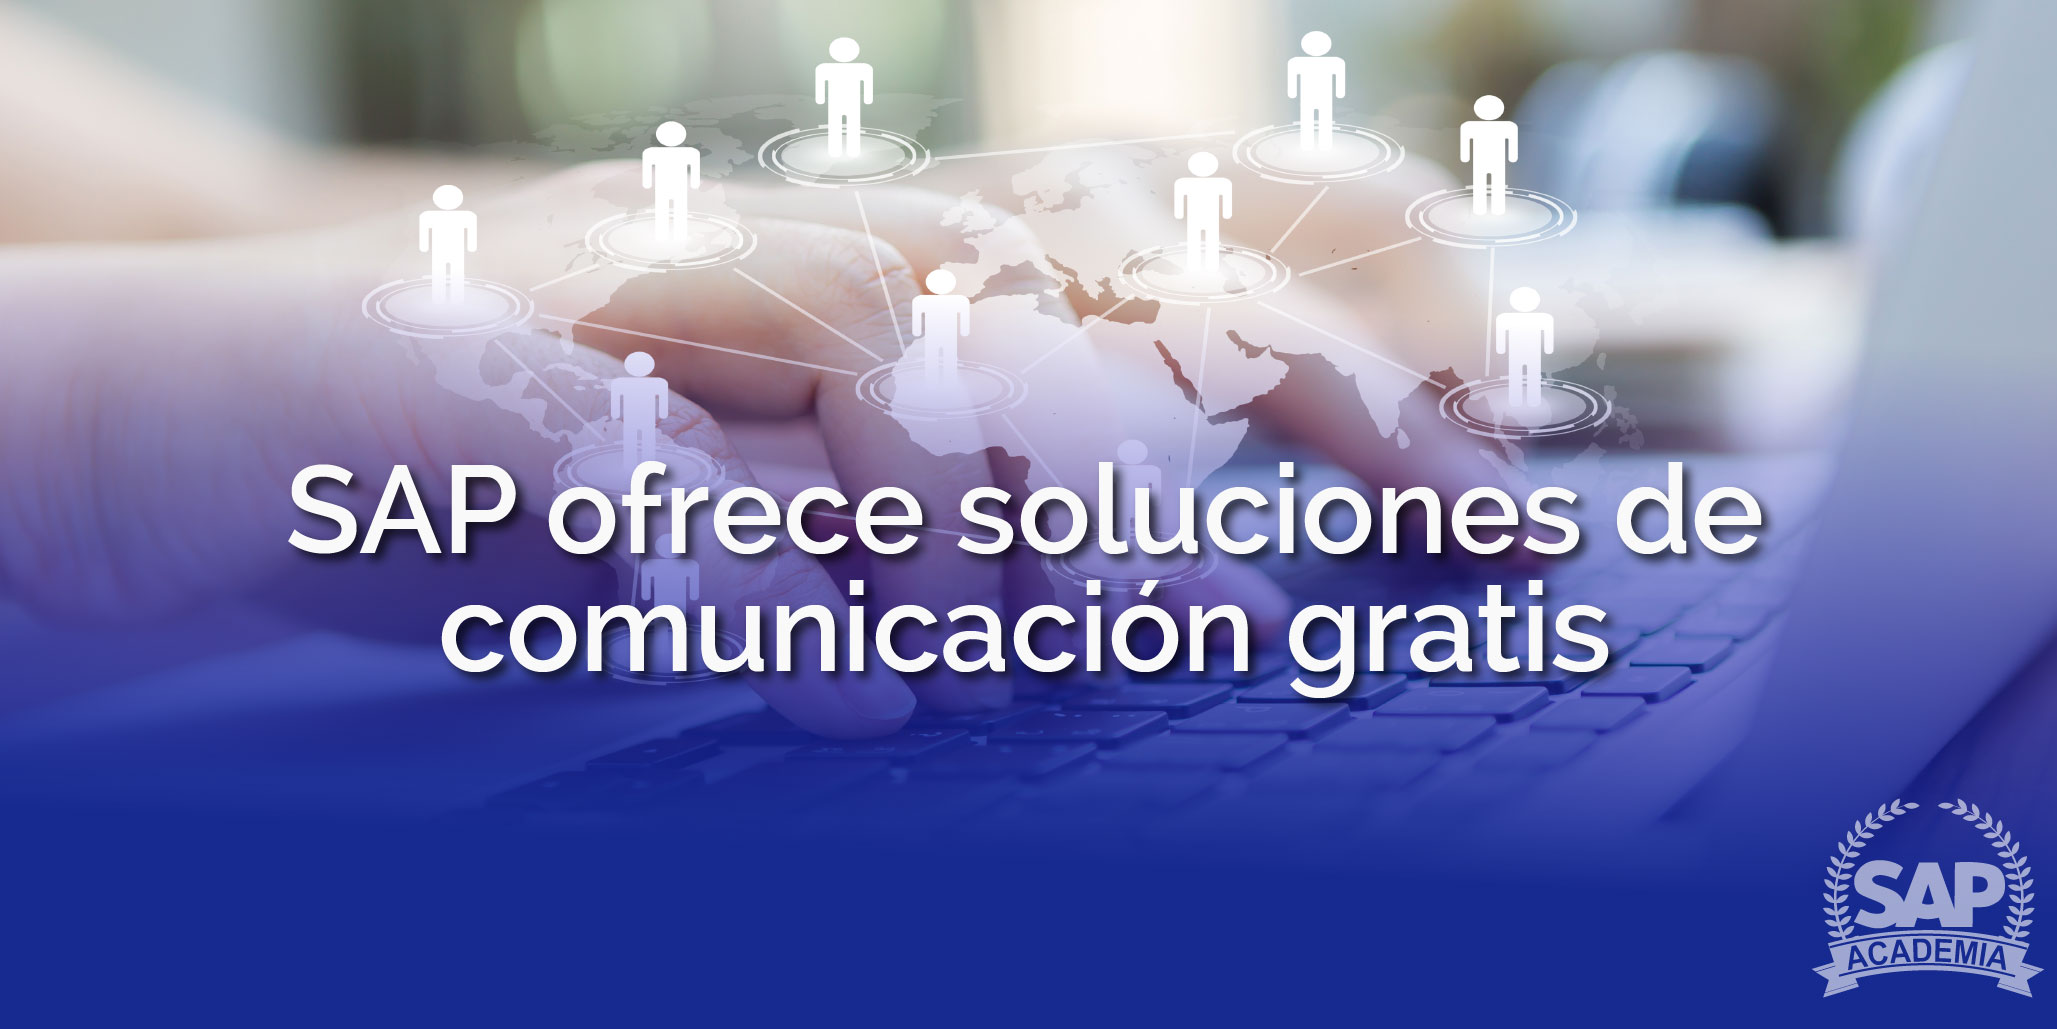 SAP OFRECE SOLUCIONES DE COMUNICACIÓN GRATIS